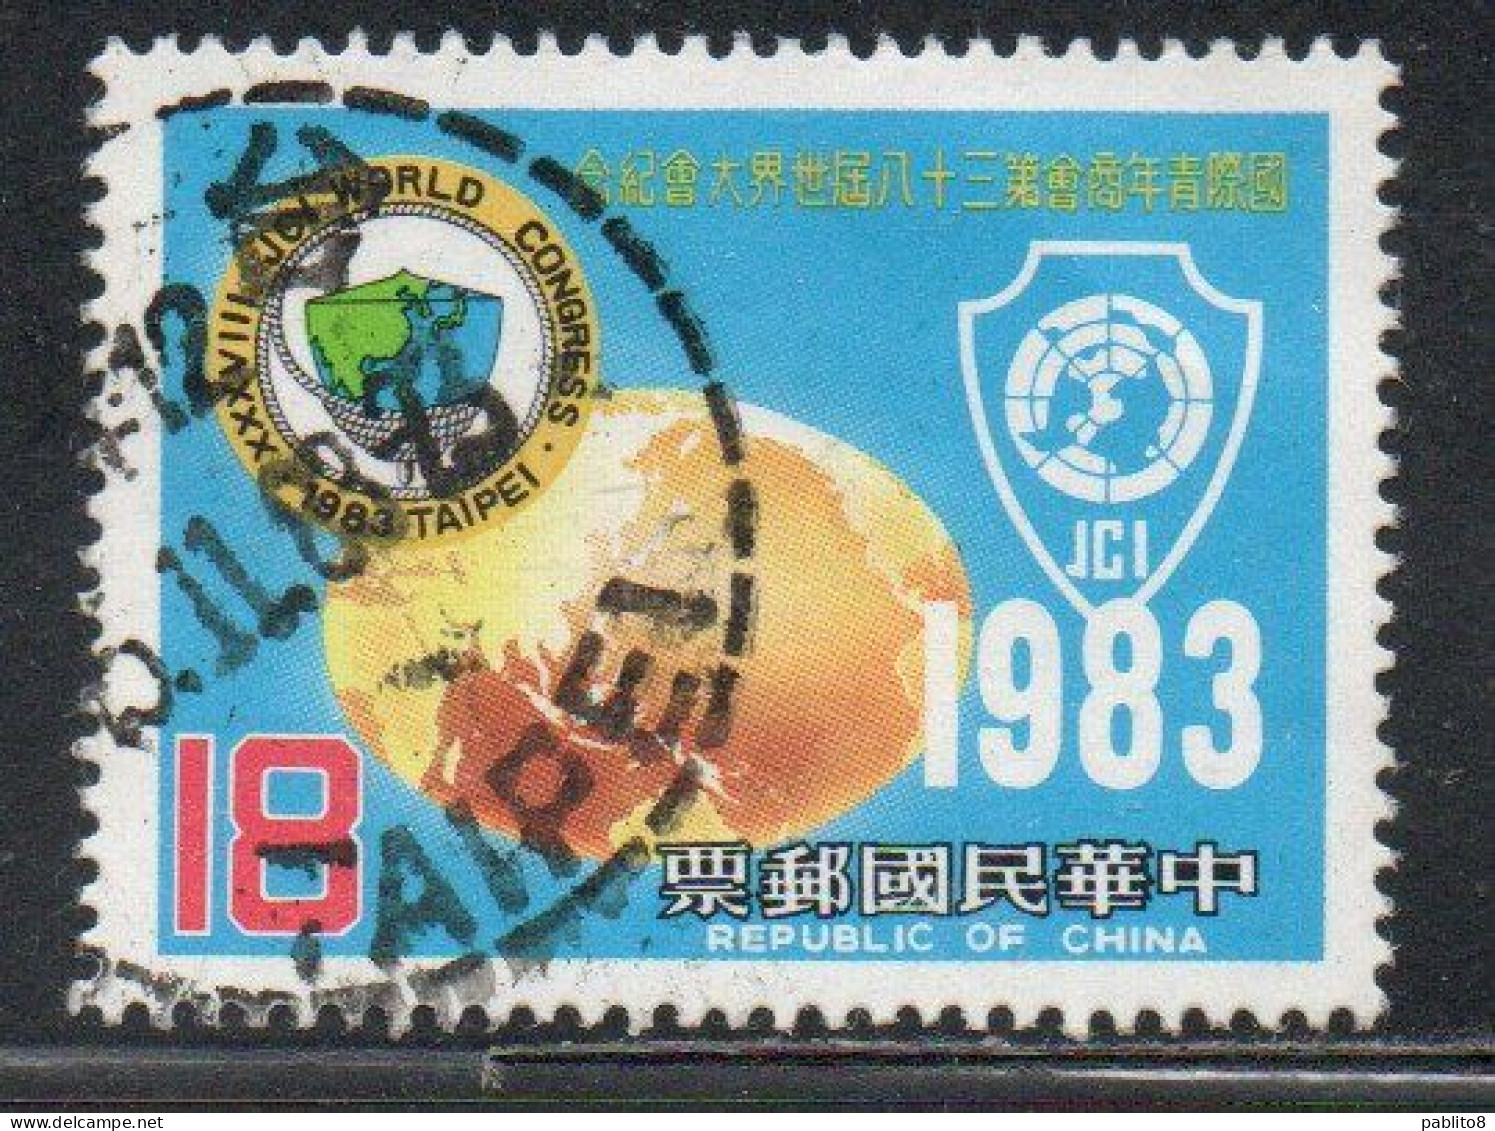 CHINA REPUBLIC CINA TAIWAN FORMOSA 1983 JCI JAYCEES INTERNATIONAL WORLD CONGRESS GLOBE EMBLEMS 18$ USED USATO OBLITERE' - Used Stamps